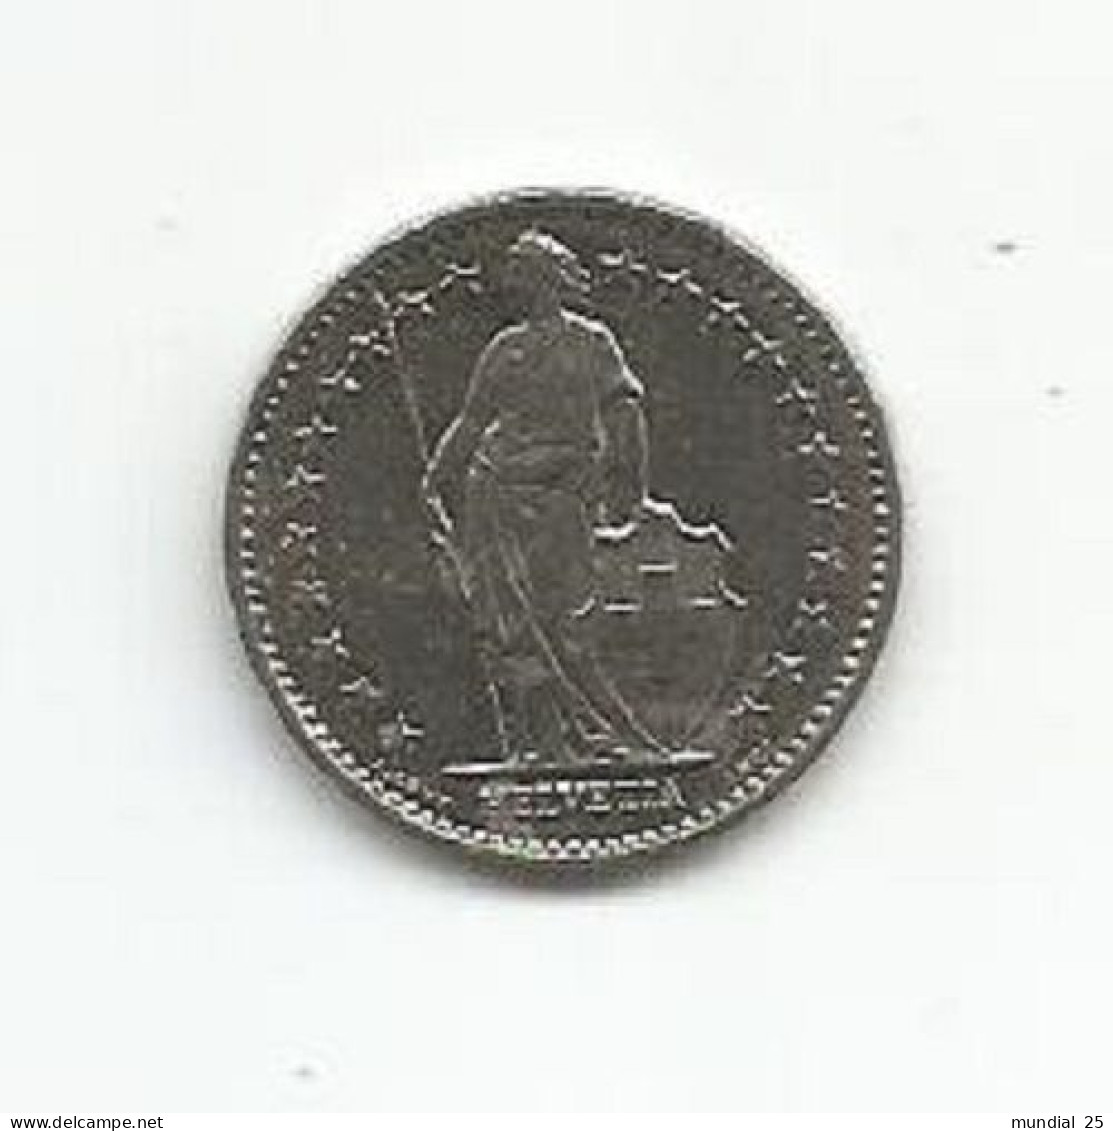 SWITZERLAND 1/2 FRANC 1980 - 1/2 Franc